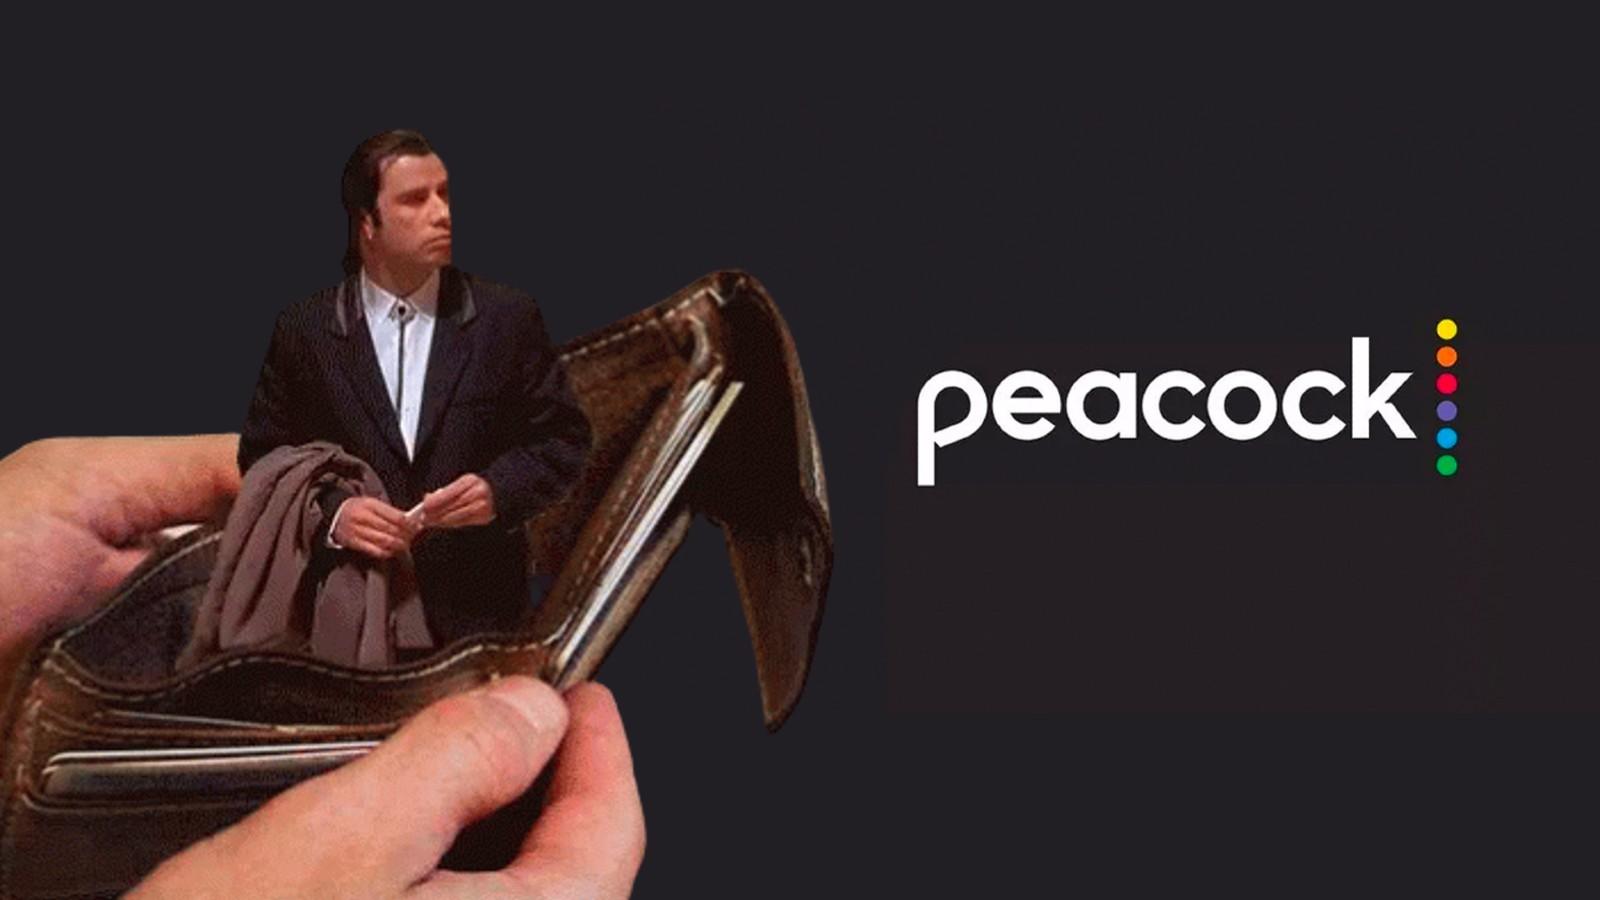 The Peacock logo and John Travolta Pulp Fiction wallet meme